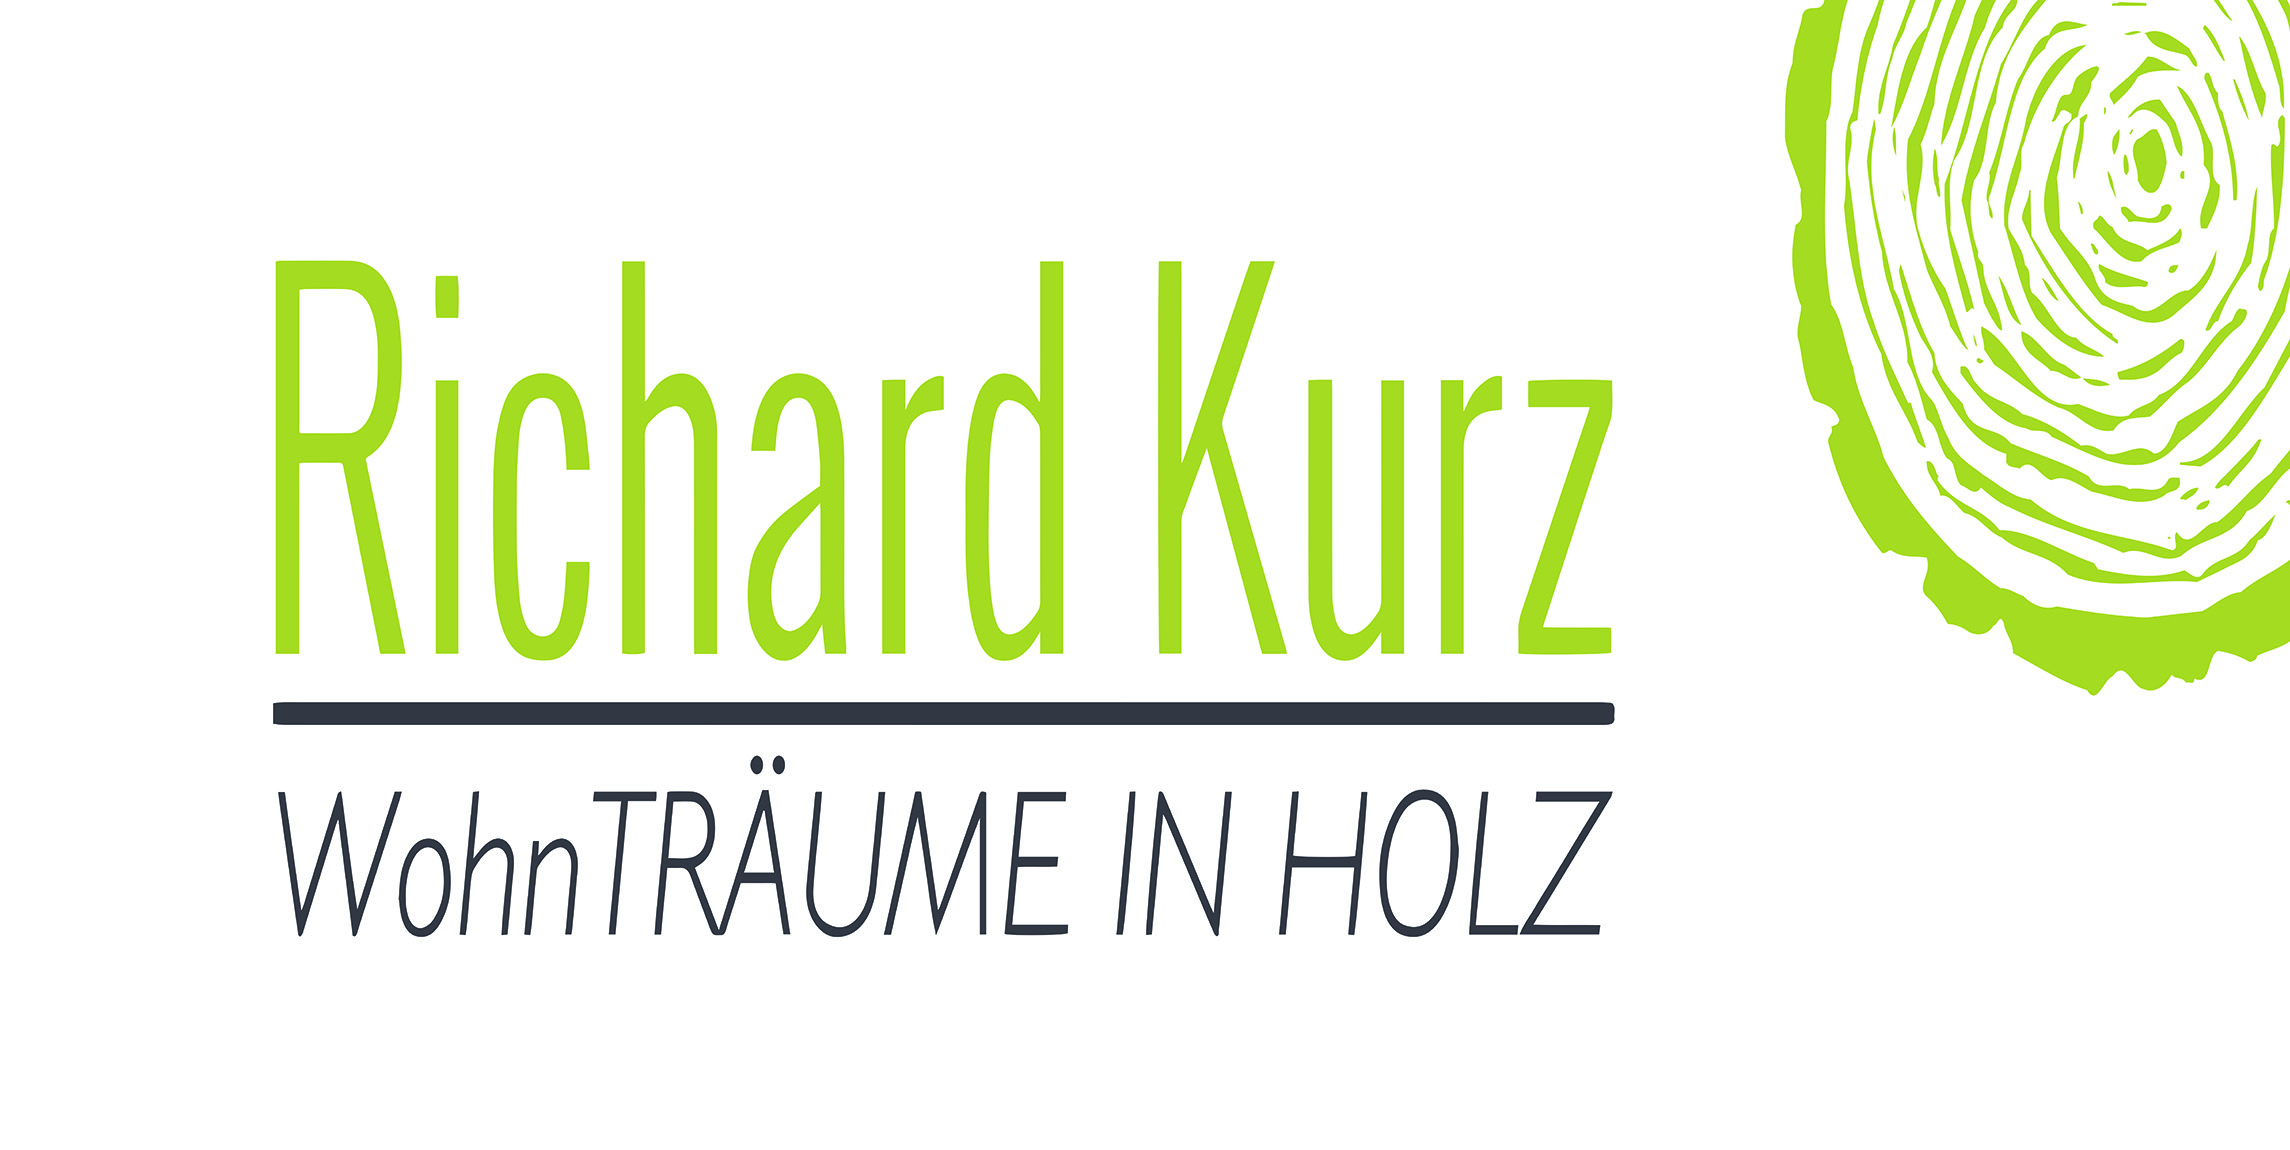 Richard_kurz